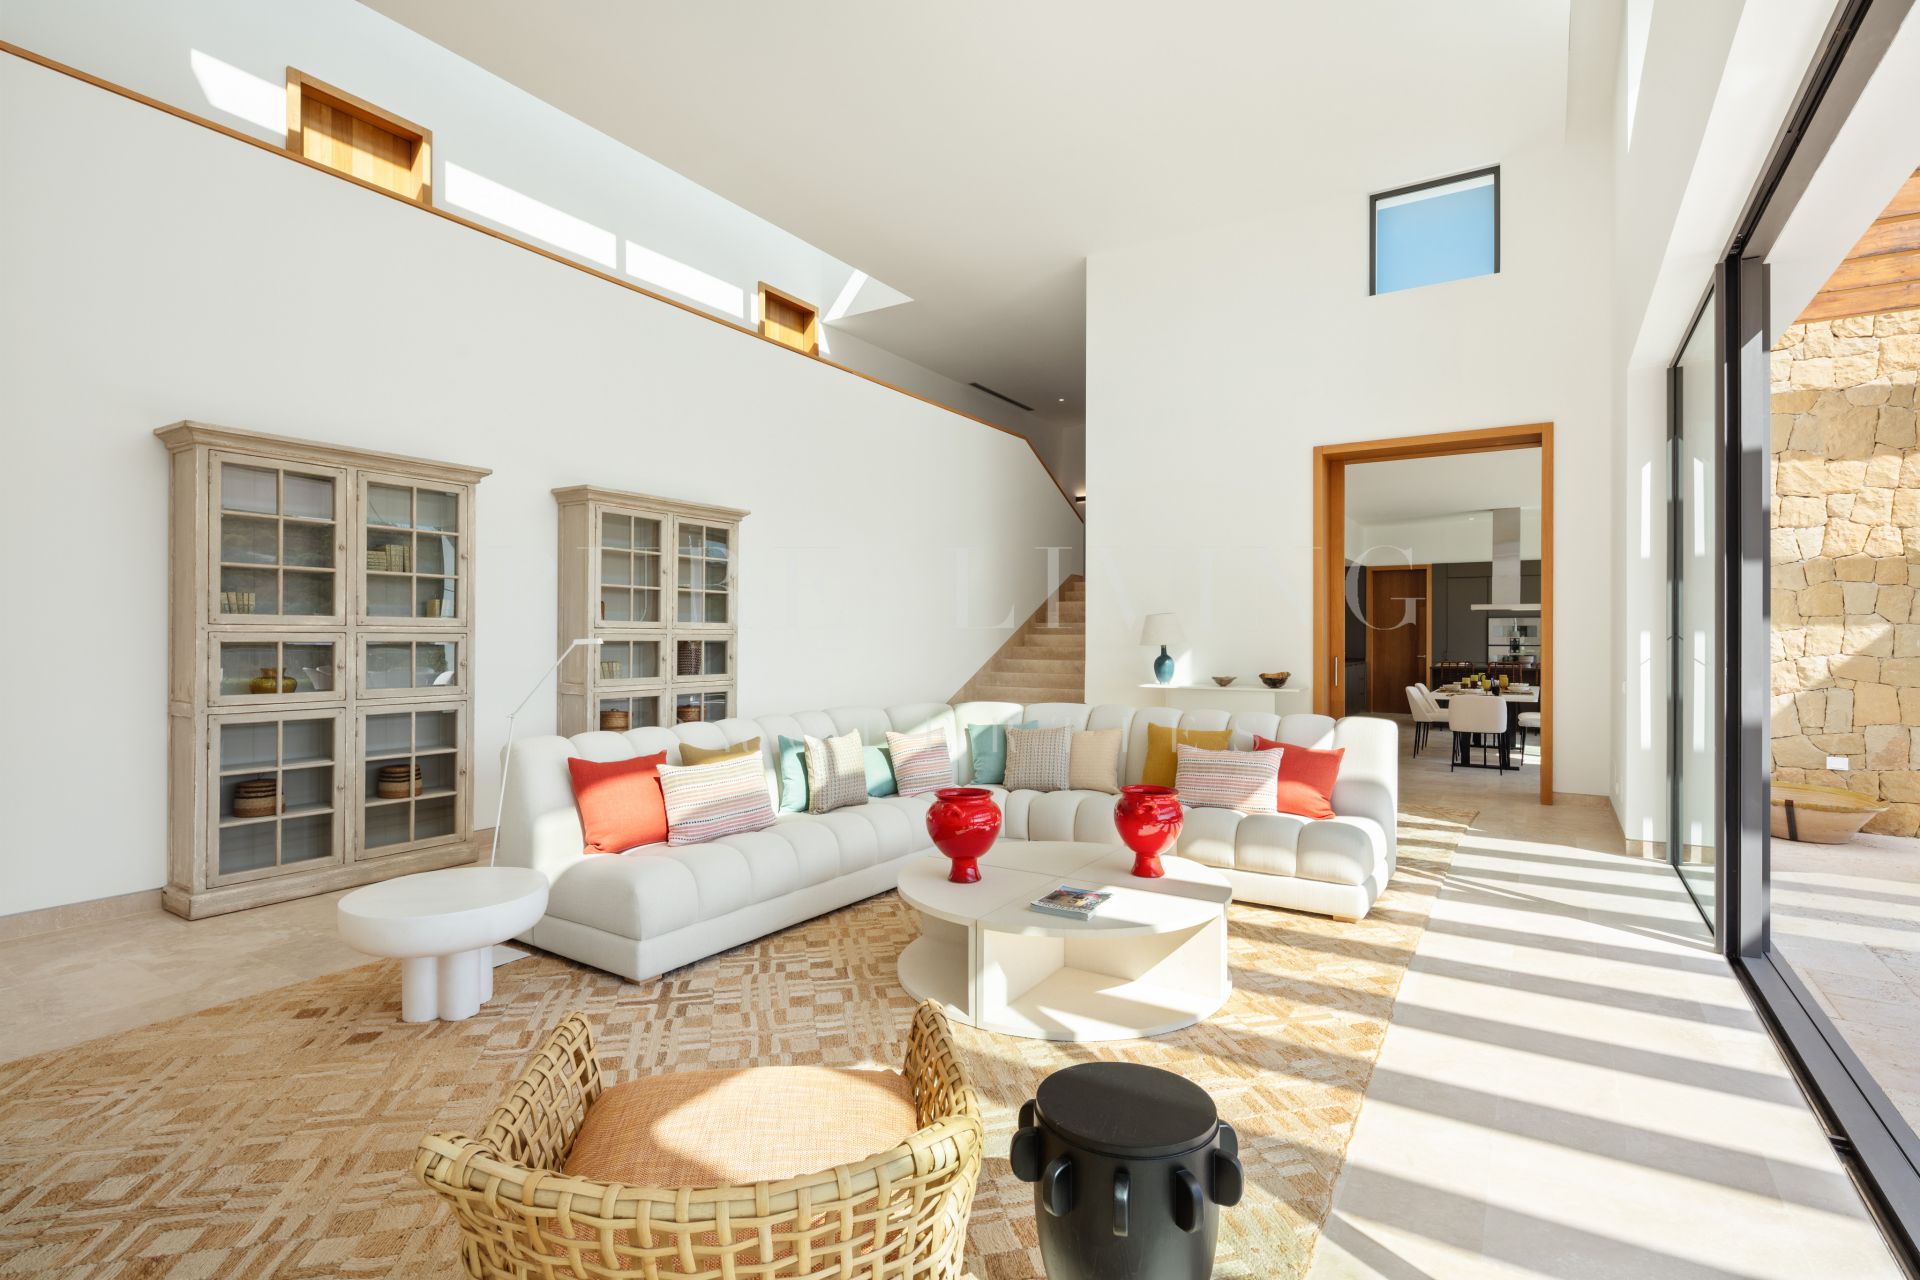 Luxurious six bedroom Villa in prestigious Finca Cortesin in Casares